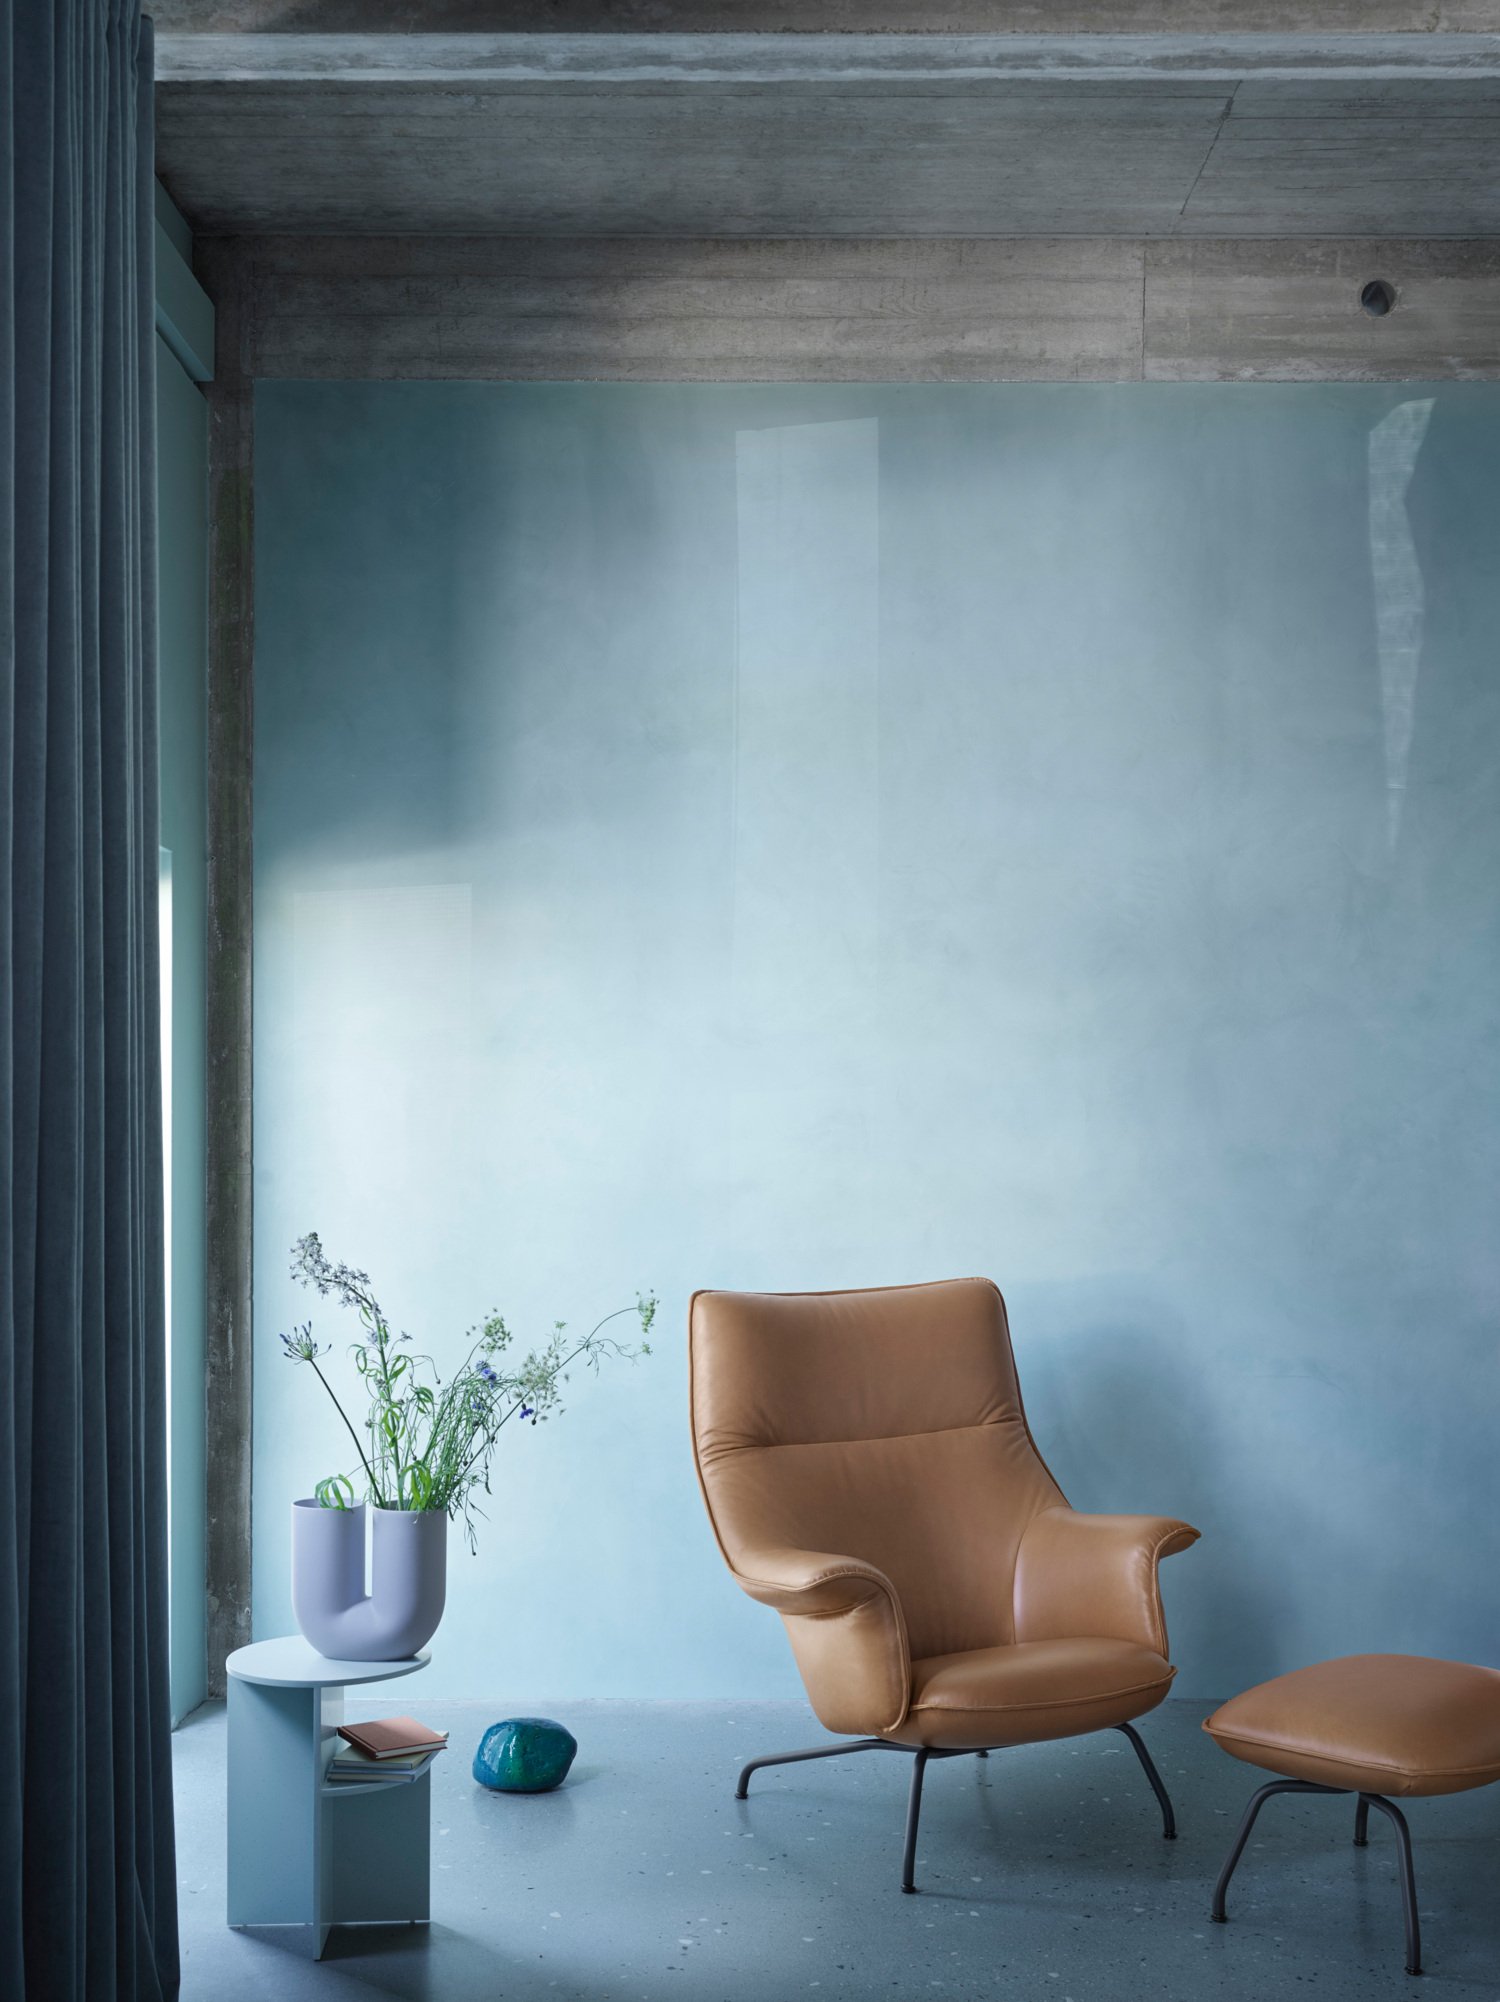 Doze Lounge Chair & Ottoman in Cognac Leather & Anthracite Black Base, Halves Side Table in Sage Green, Kink Vase in Light Blue